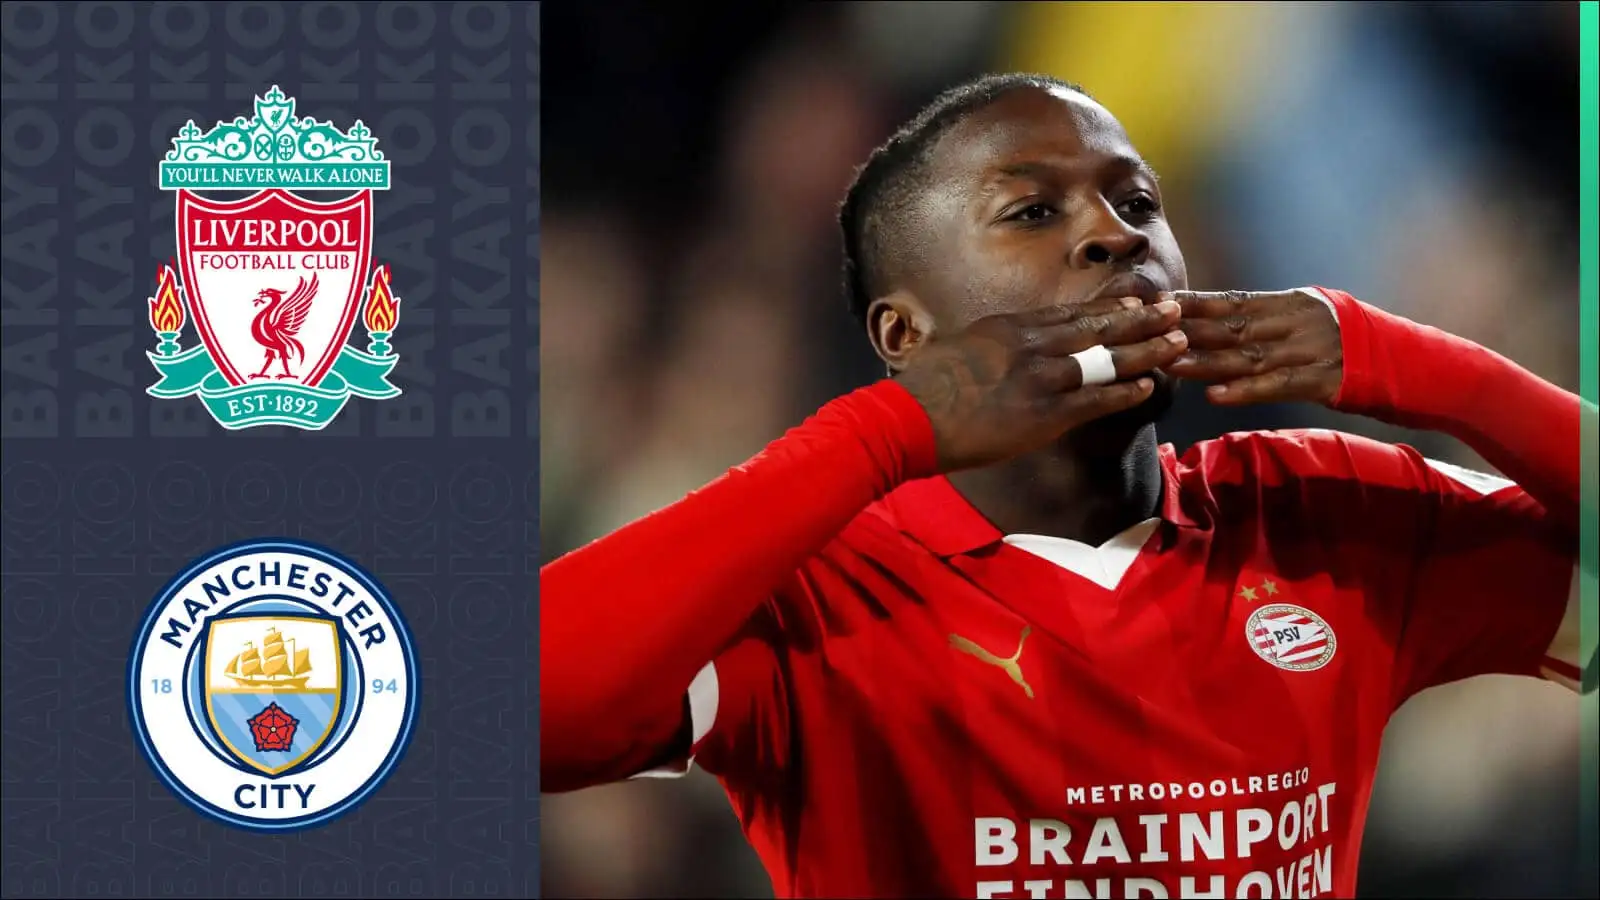 Johan Bakayoko next to the Liverpool and Man City badges